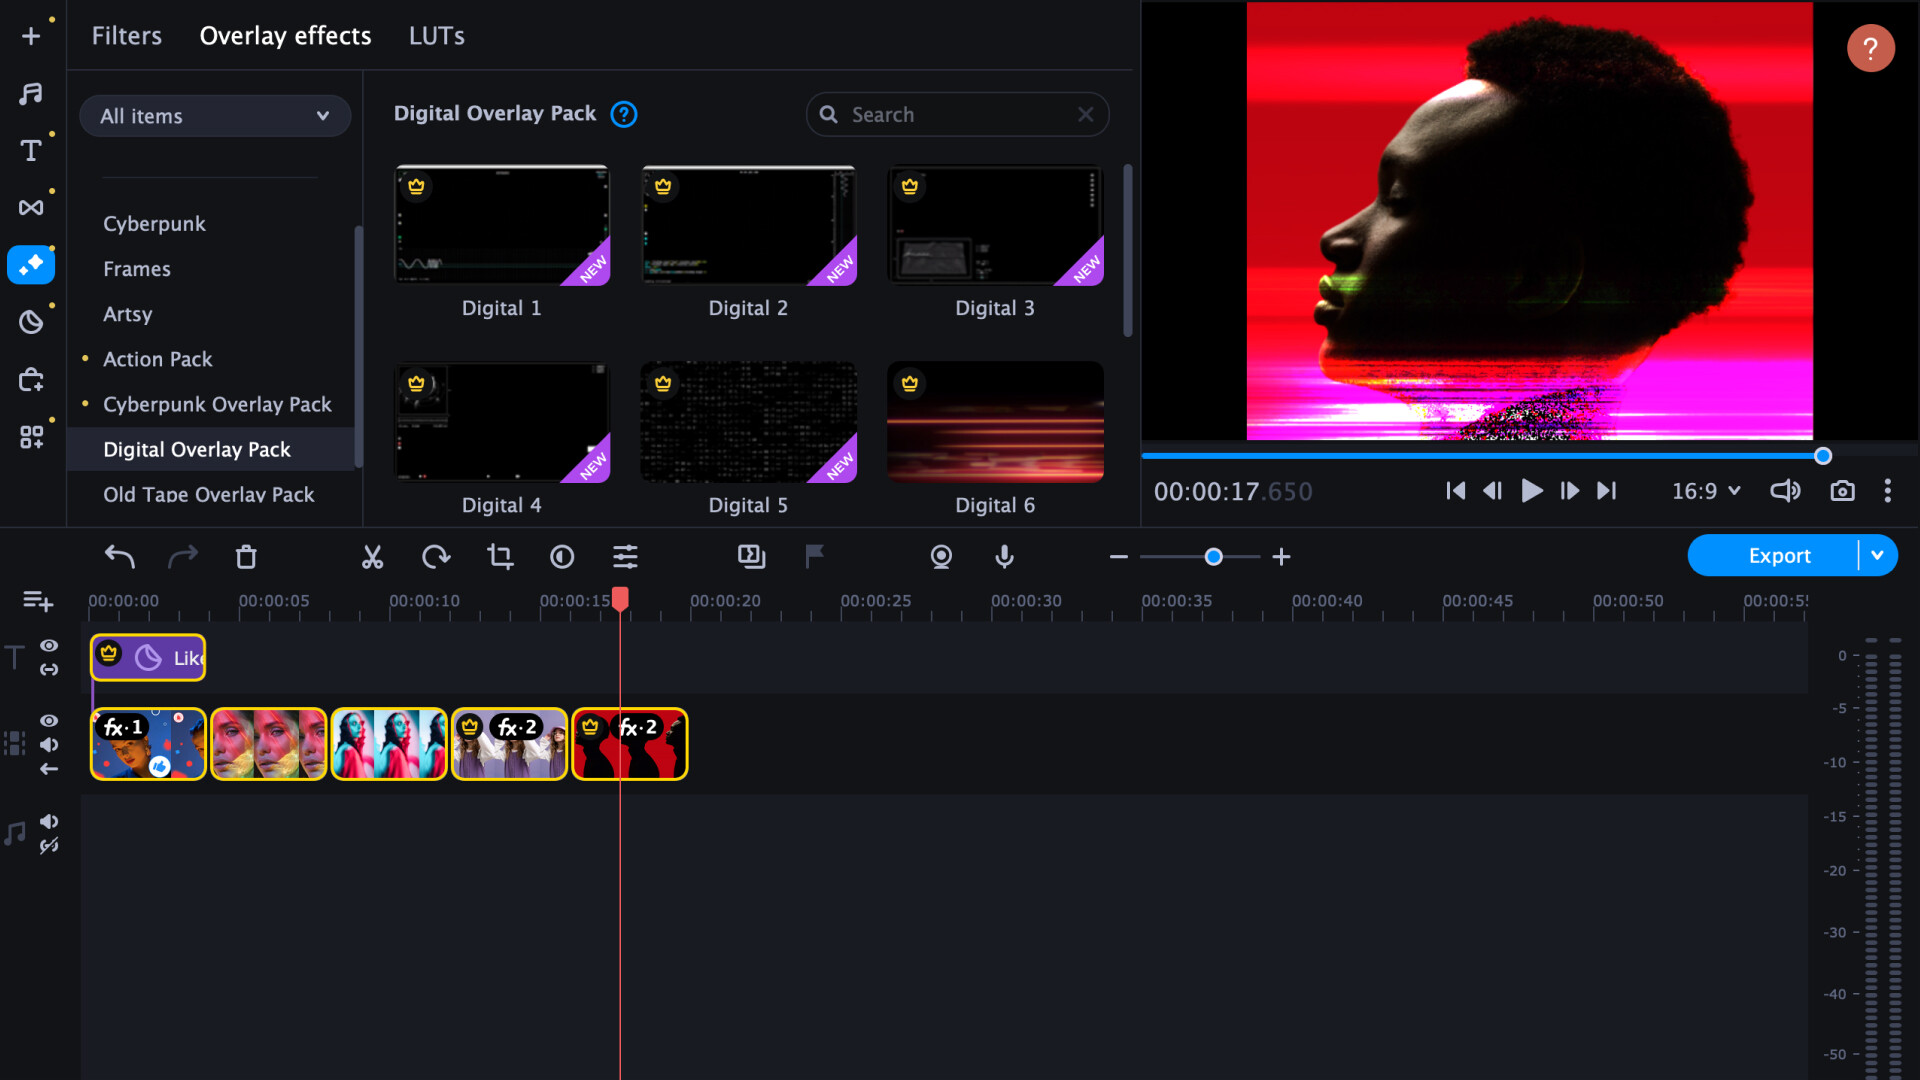 Movavi Video Editor 2023 - Digital Overlay Pack Featured Screenshot #1